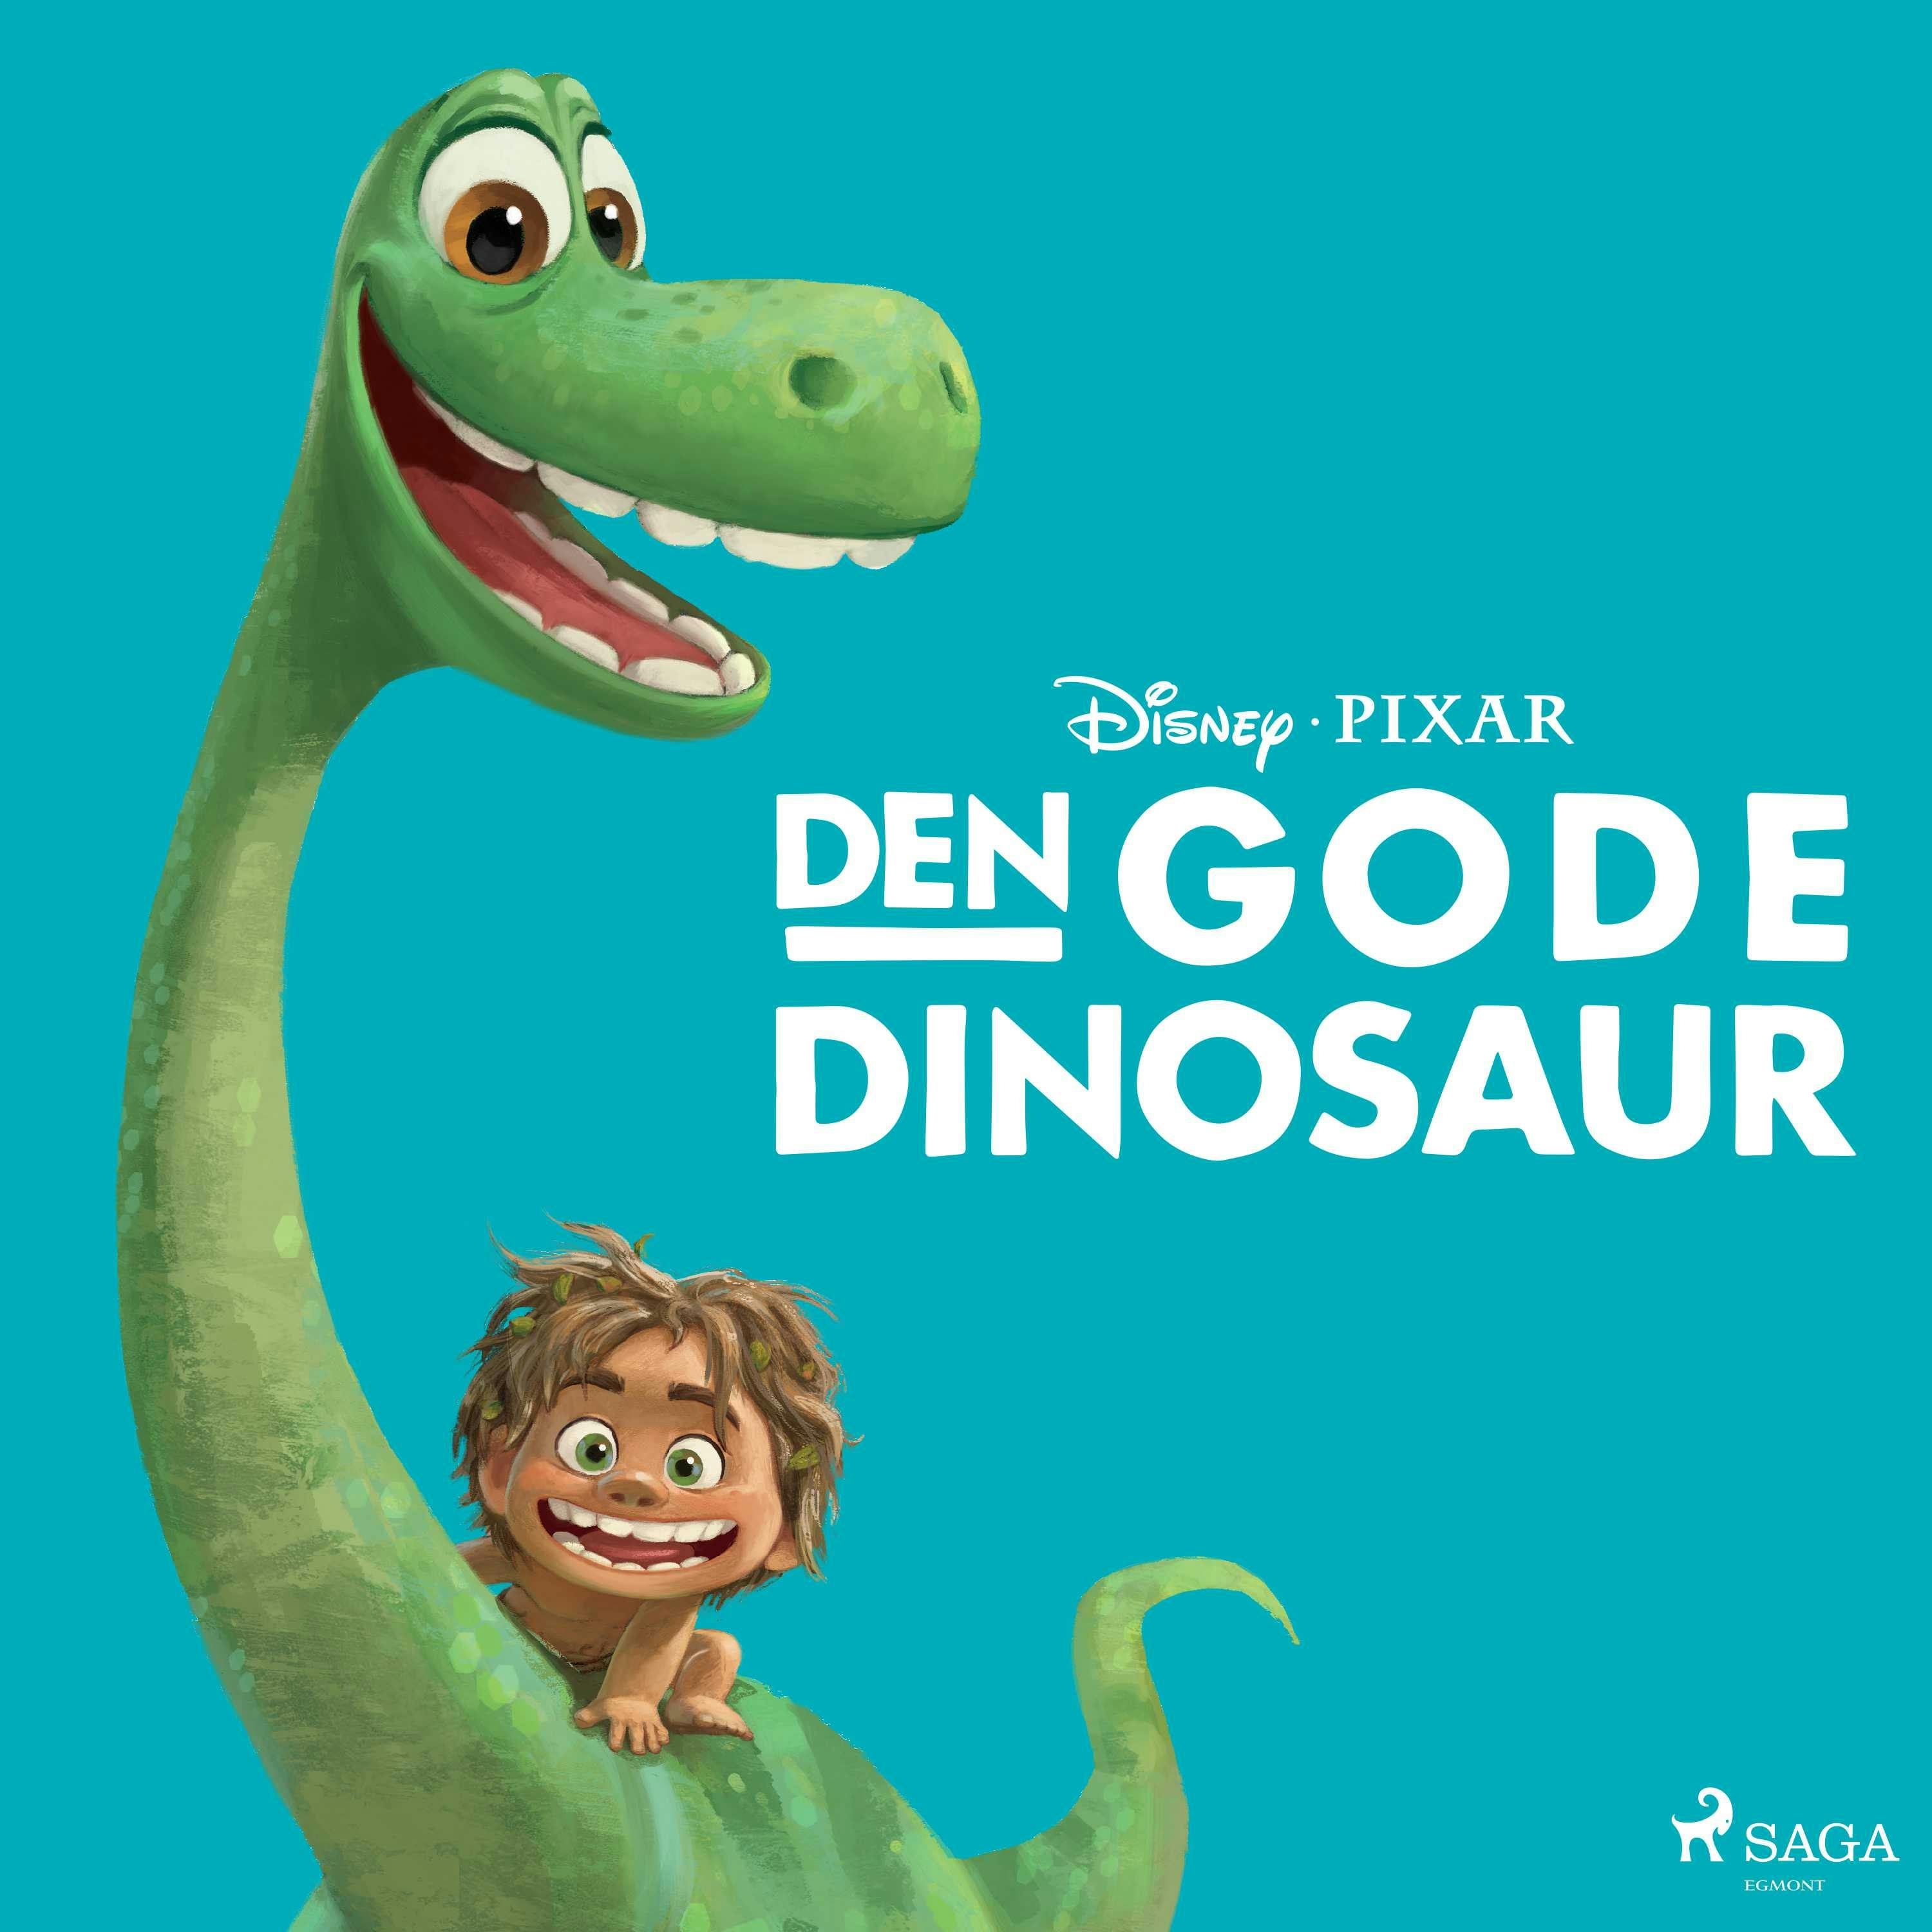 Den gode dinosaur - Disney